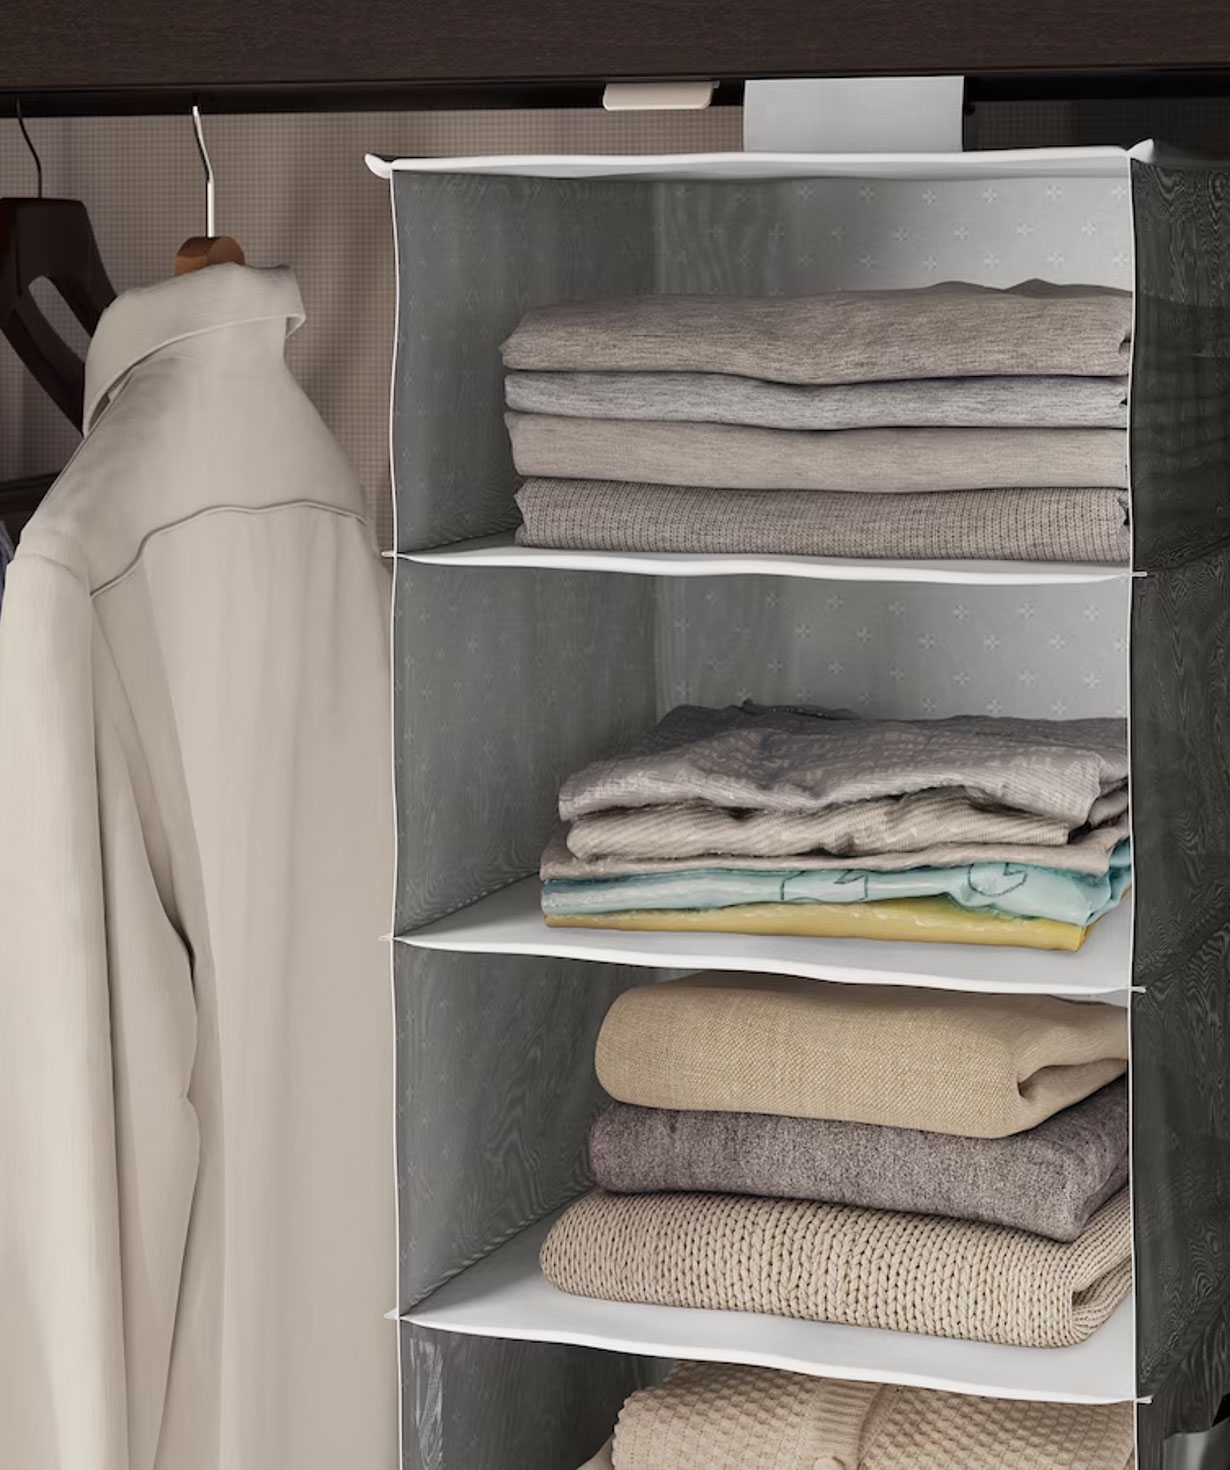 Cloth cabinet ''BLÄDDRARE'' hanging